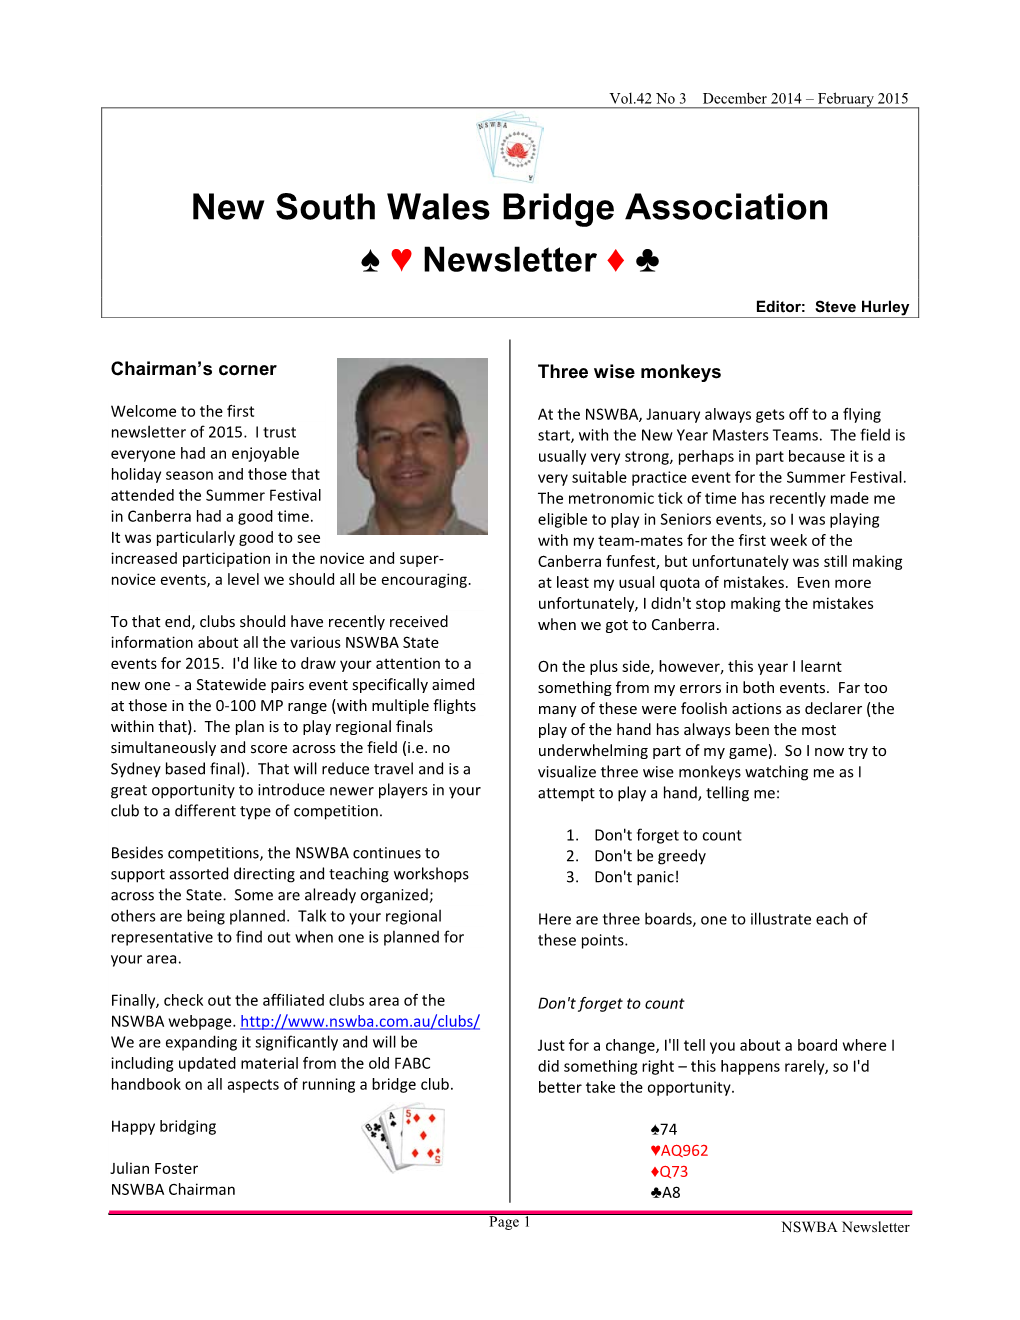 New South Wales Bridge Association ♠ ♥ Newsletter ♦ ♣